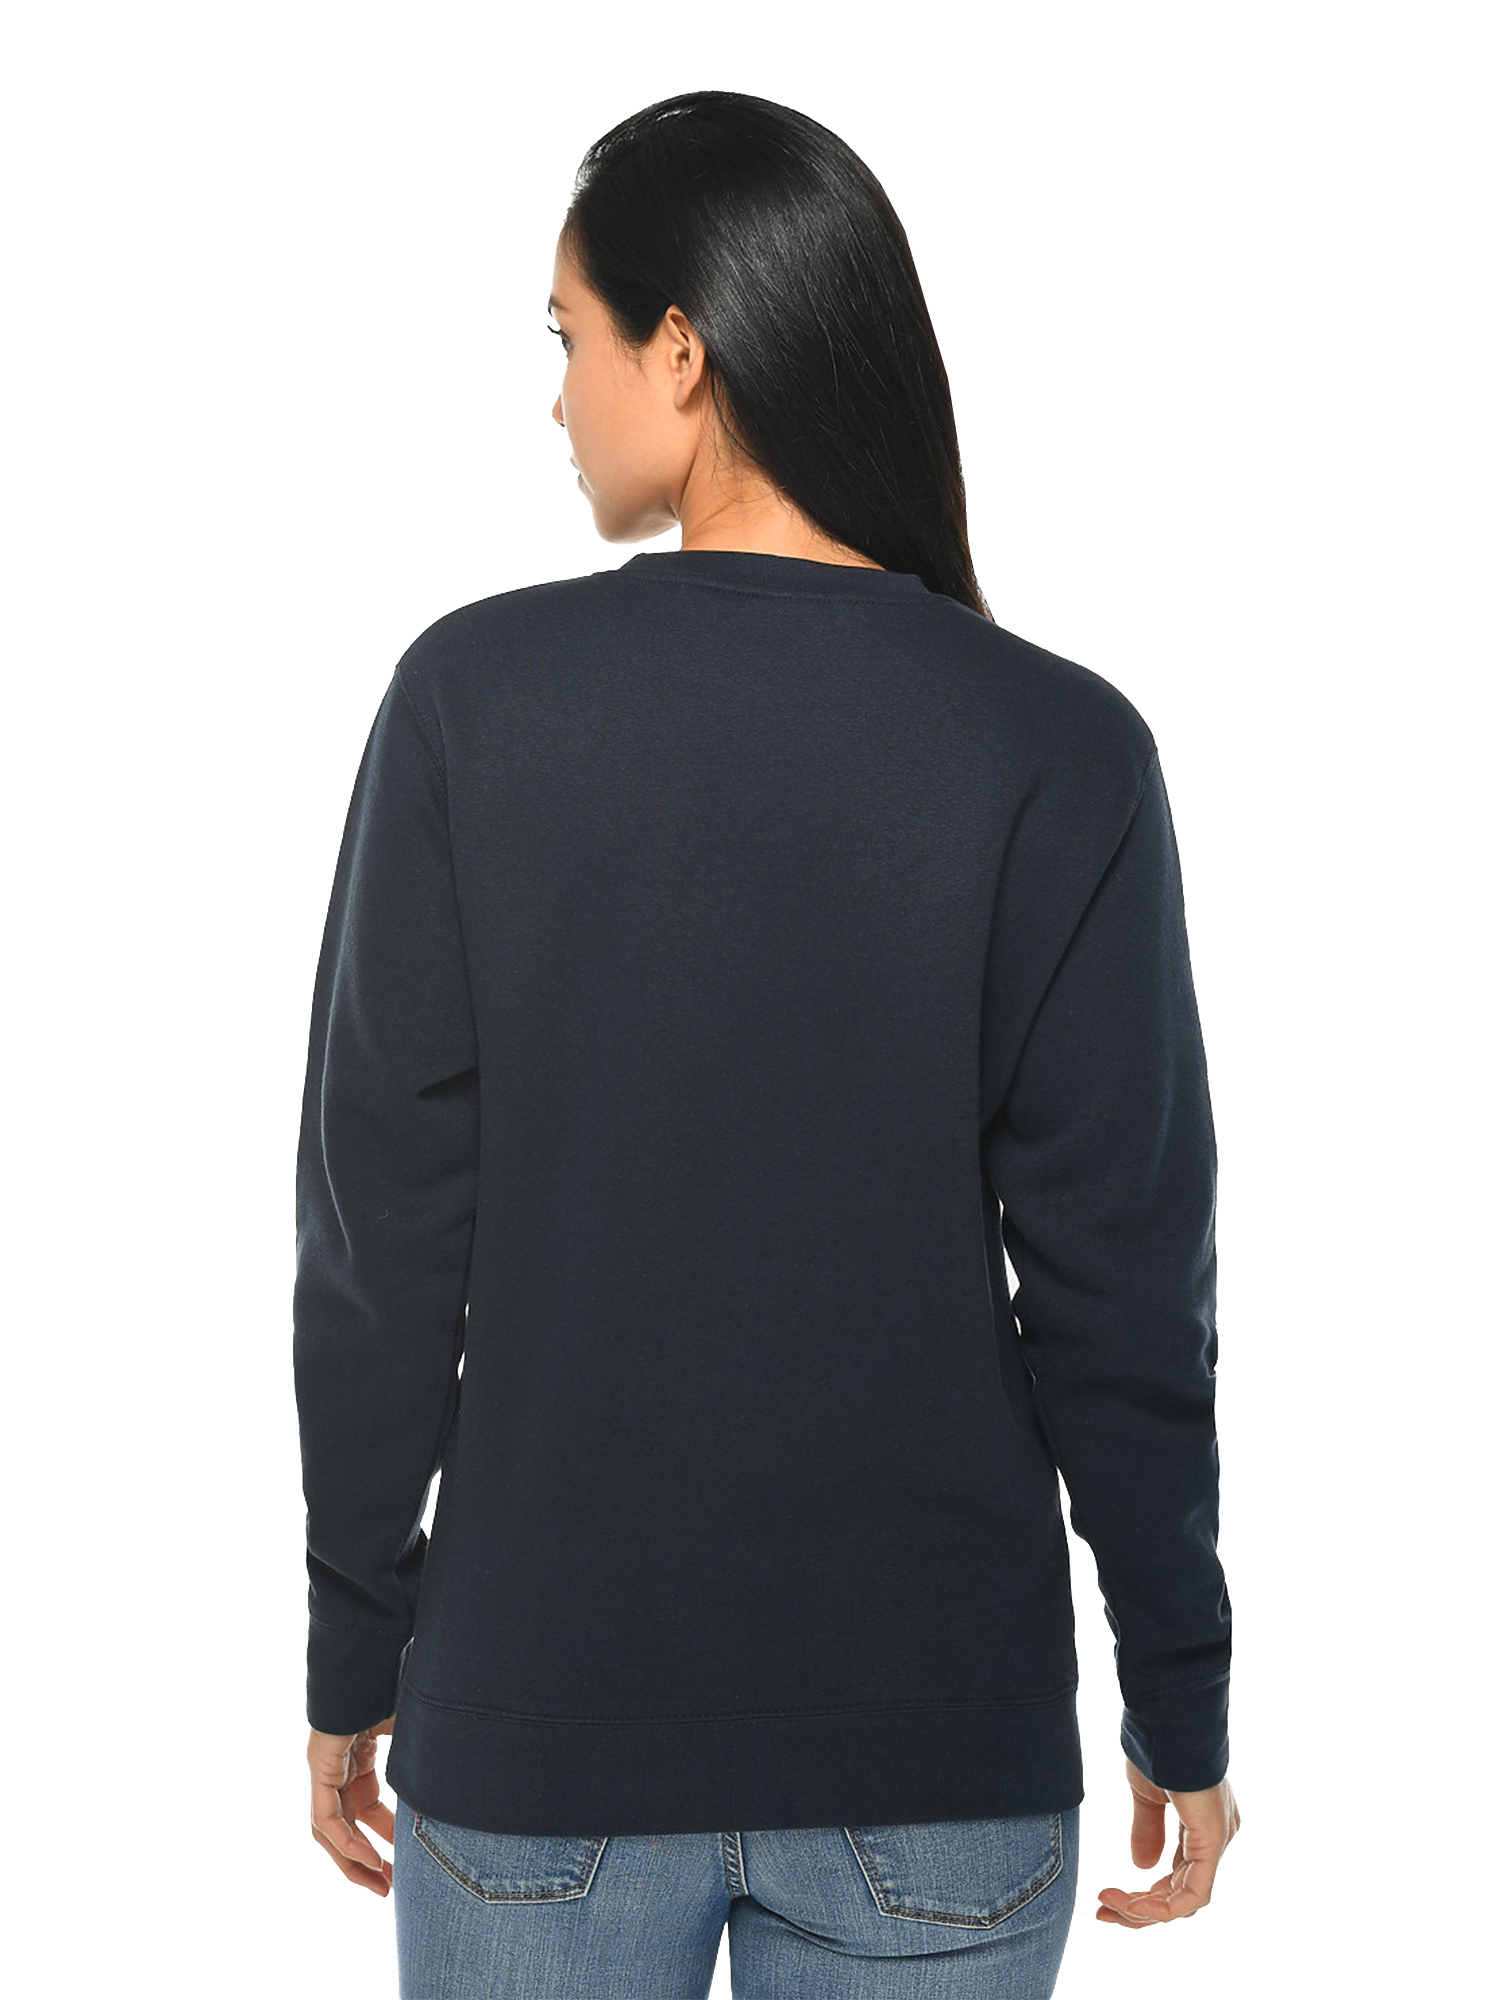 Navy Sweatshirts for Men Womens Sweatshirt Casual Plain Long Sleeve Navy Blue Sweaters for Women and Men - image 4 of 5